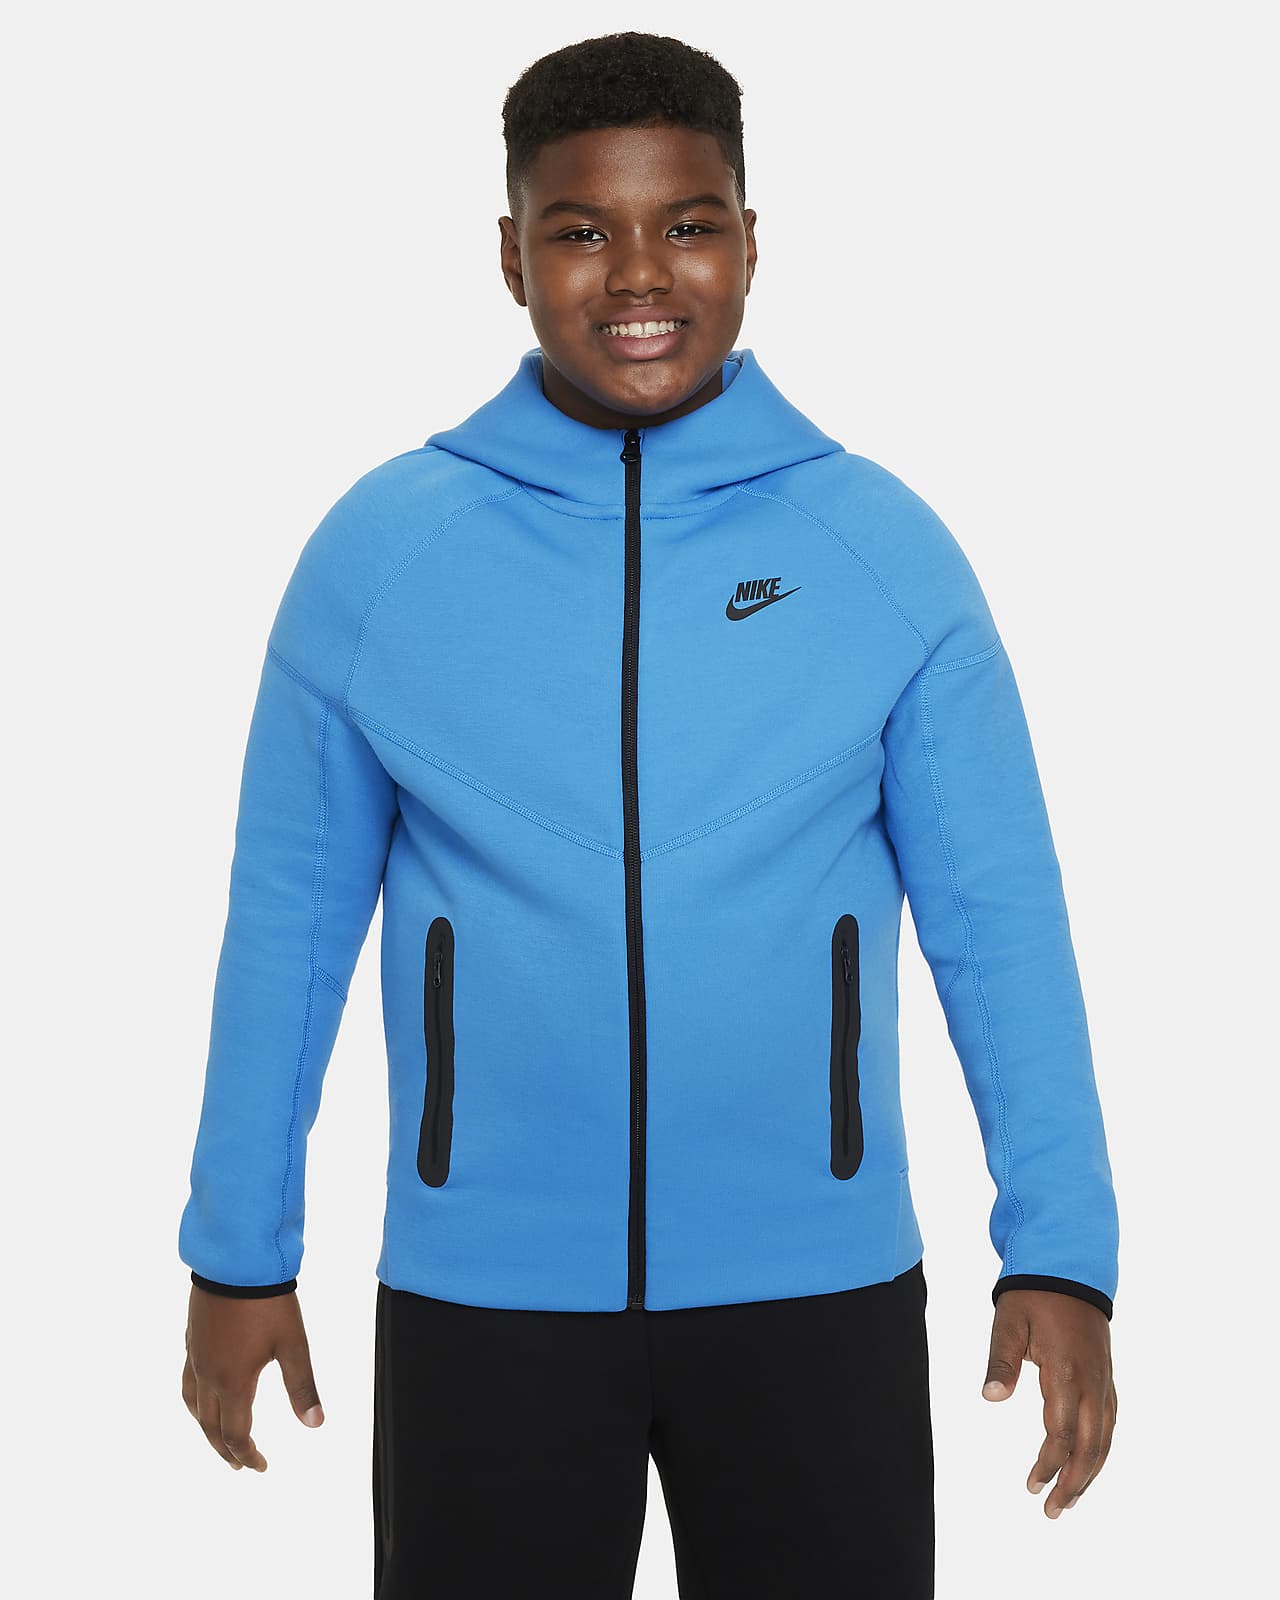 Sudadera con gorro de cierre completo para niño talla grande Nike Sportswear Tech Fleece (talla amplia)